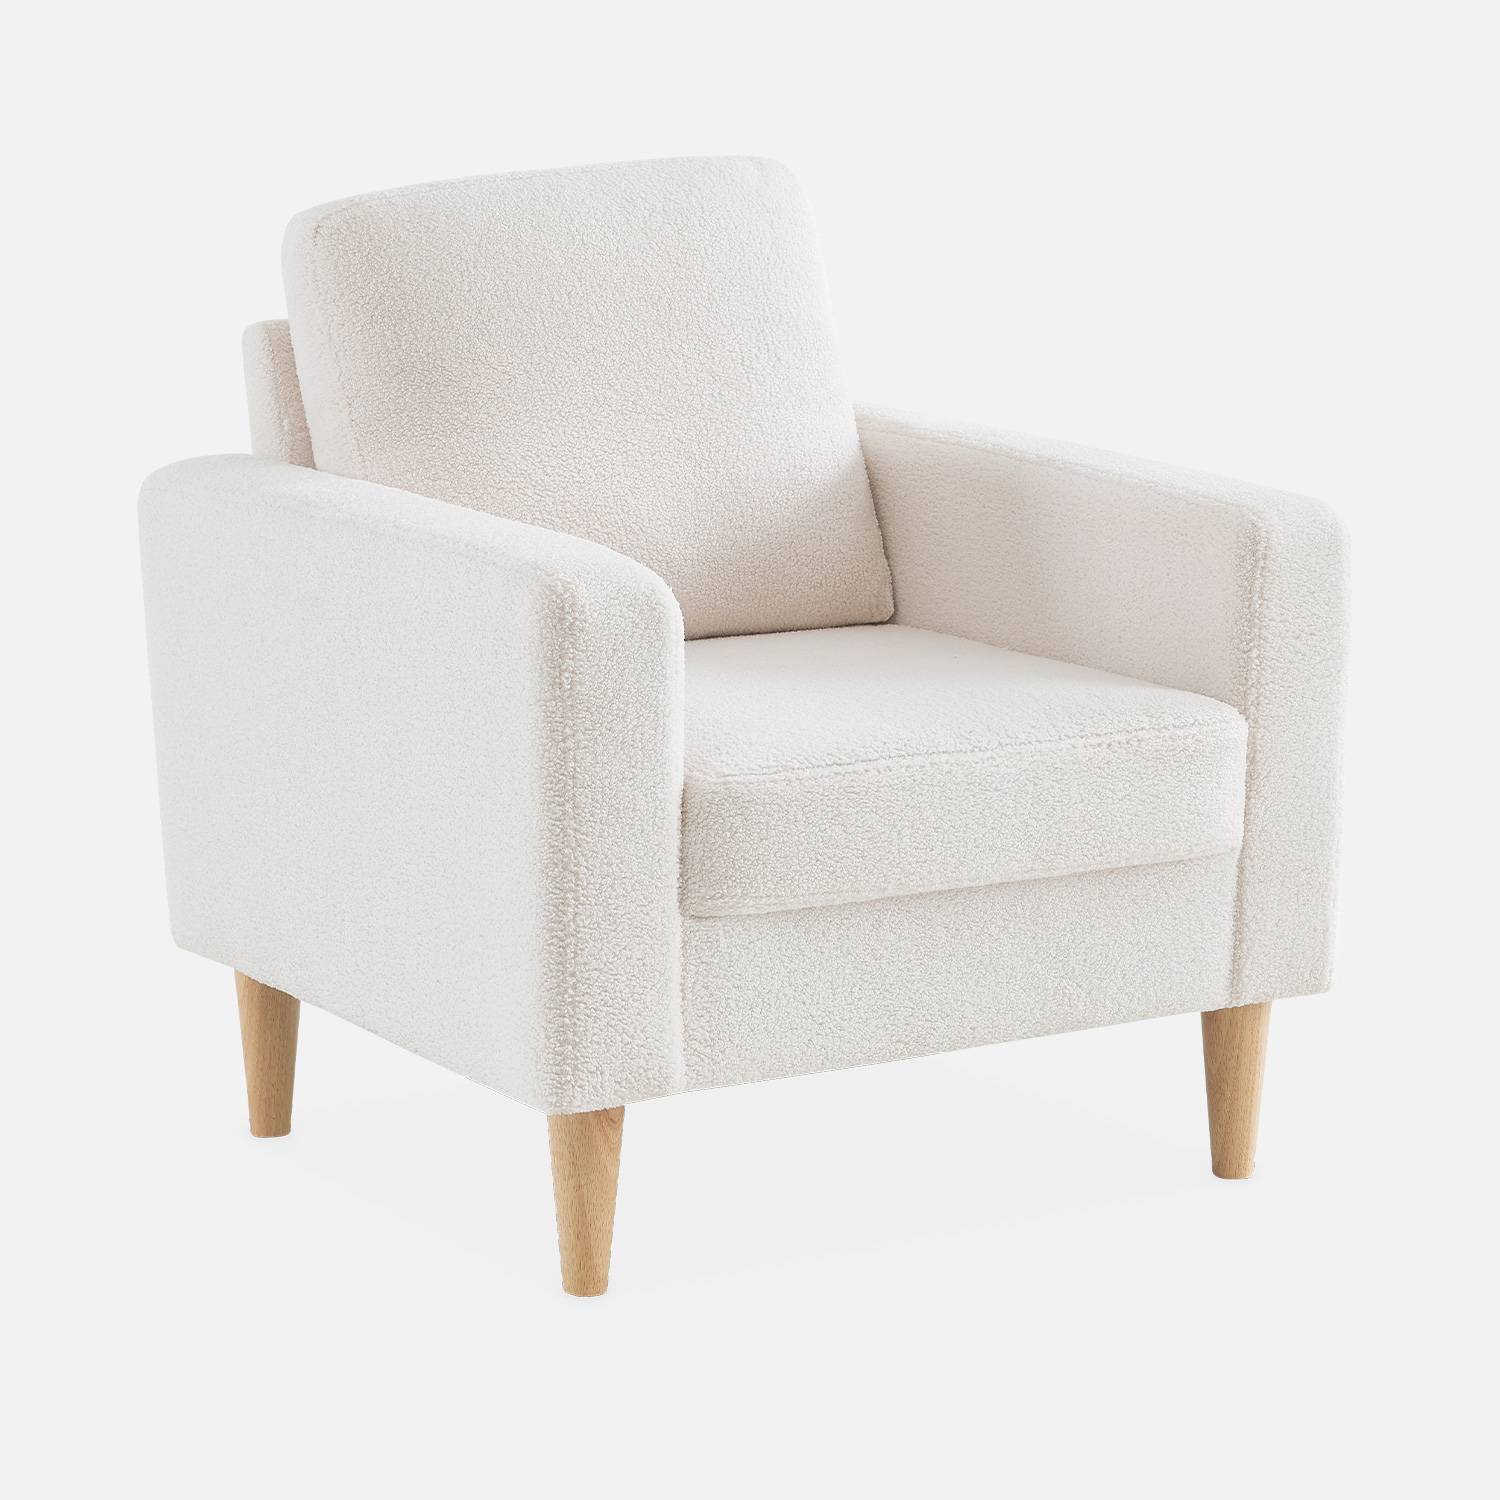 Bouclé Sessel Weiß, skandinavisches Design - Bjorn - 1 Sitzer, Fauteuil gerade mit Holzbeinen Photo3